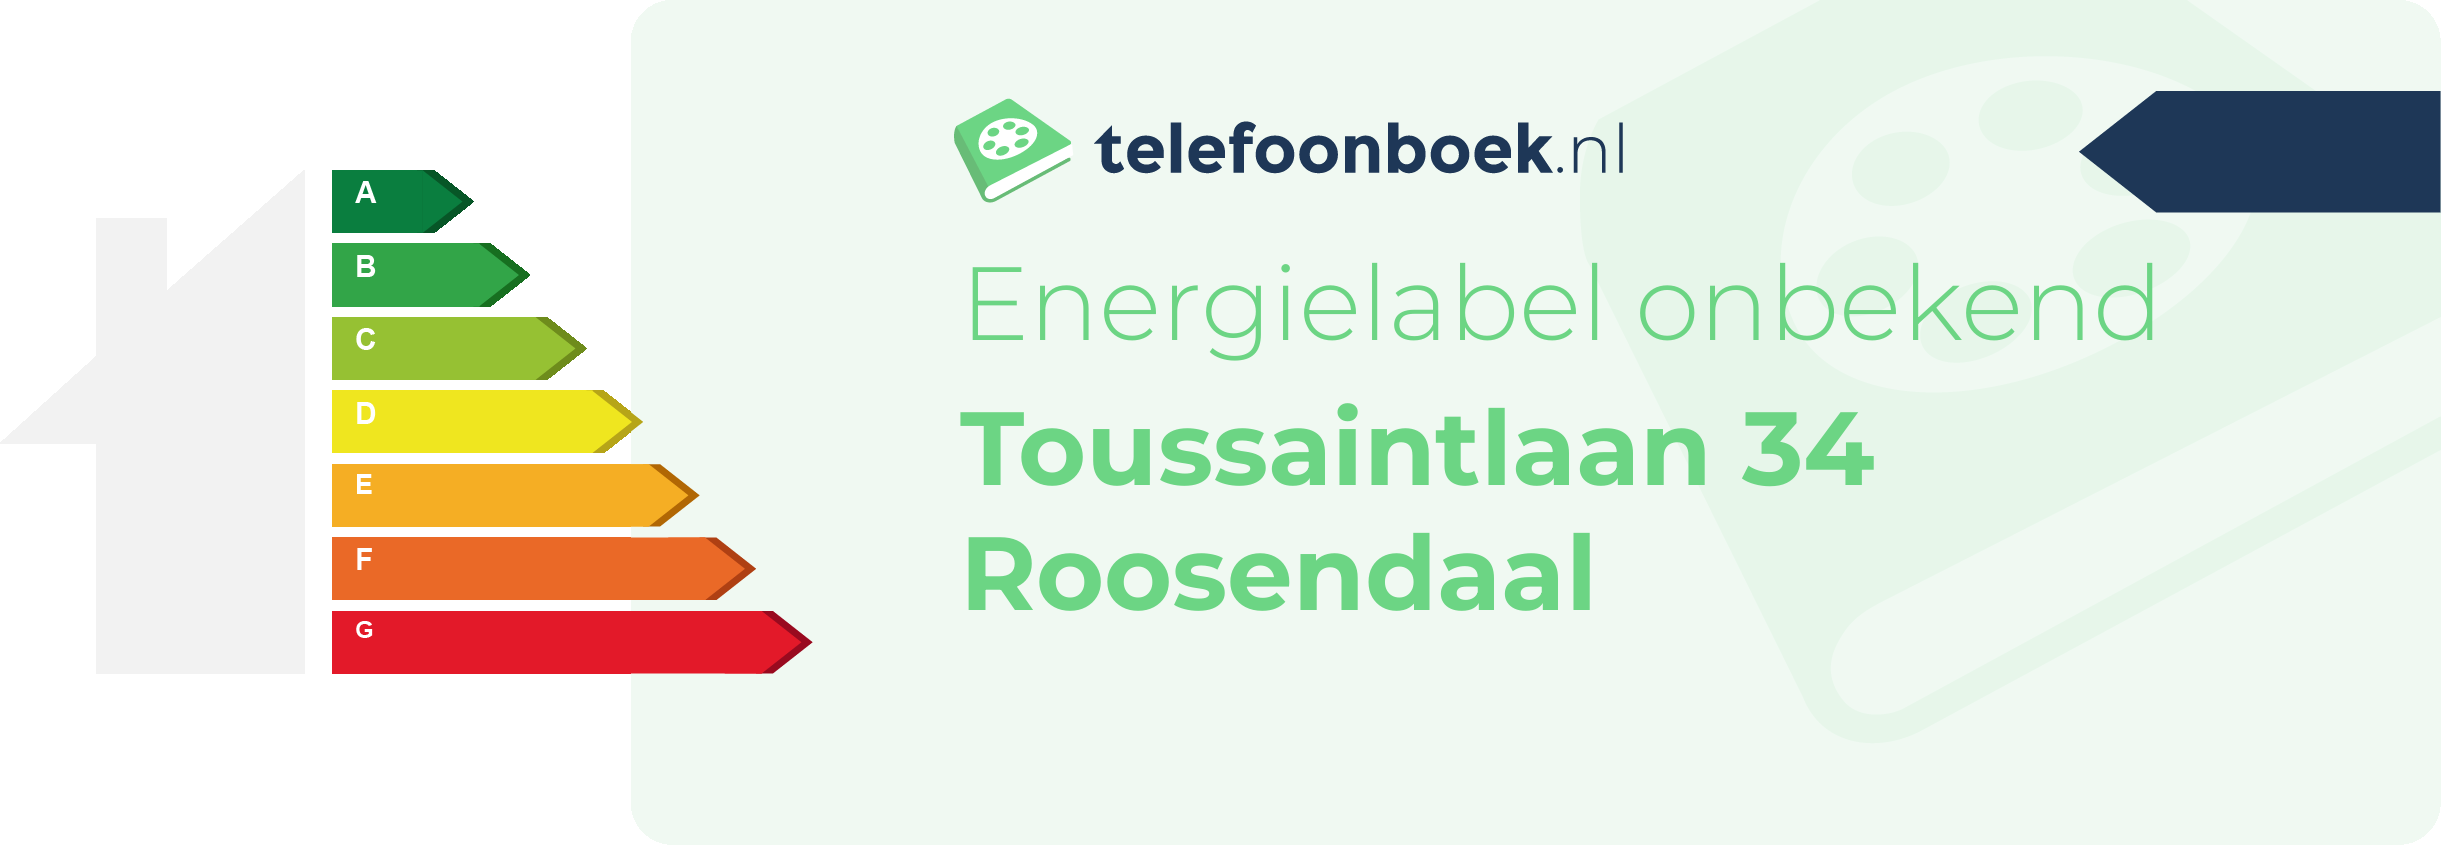 Energielabel Toussaintlaan 34 Roosendaal